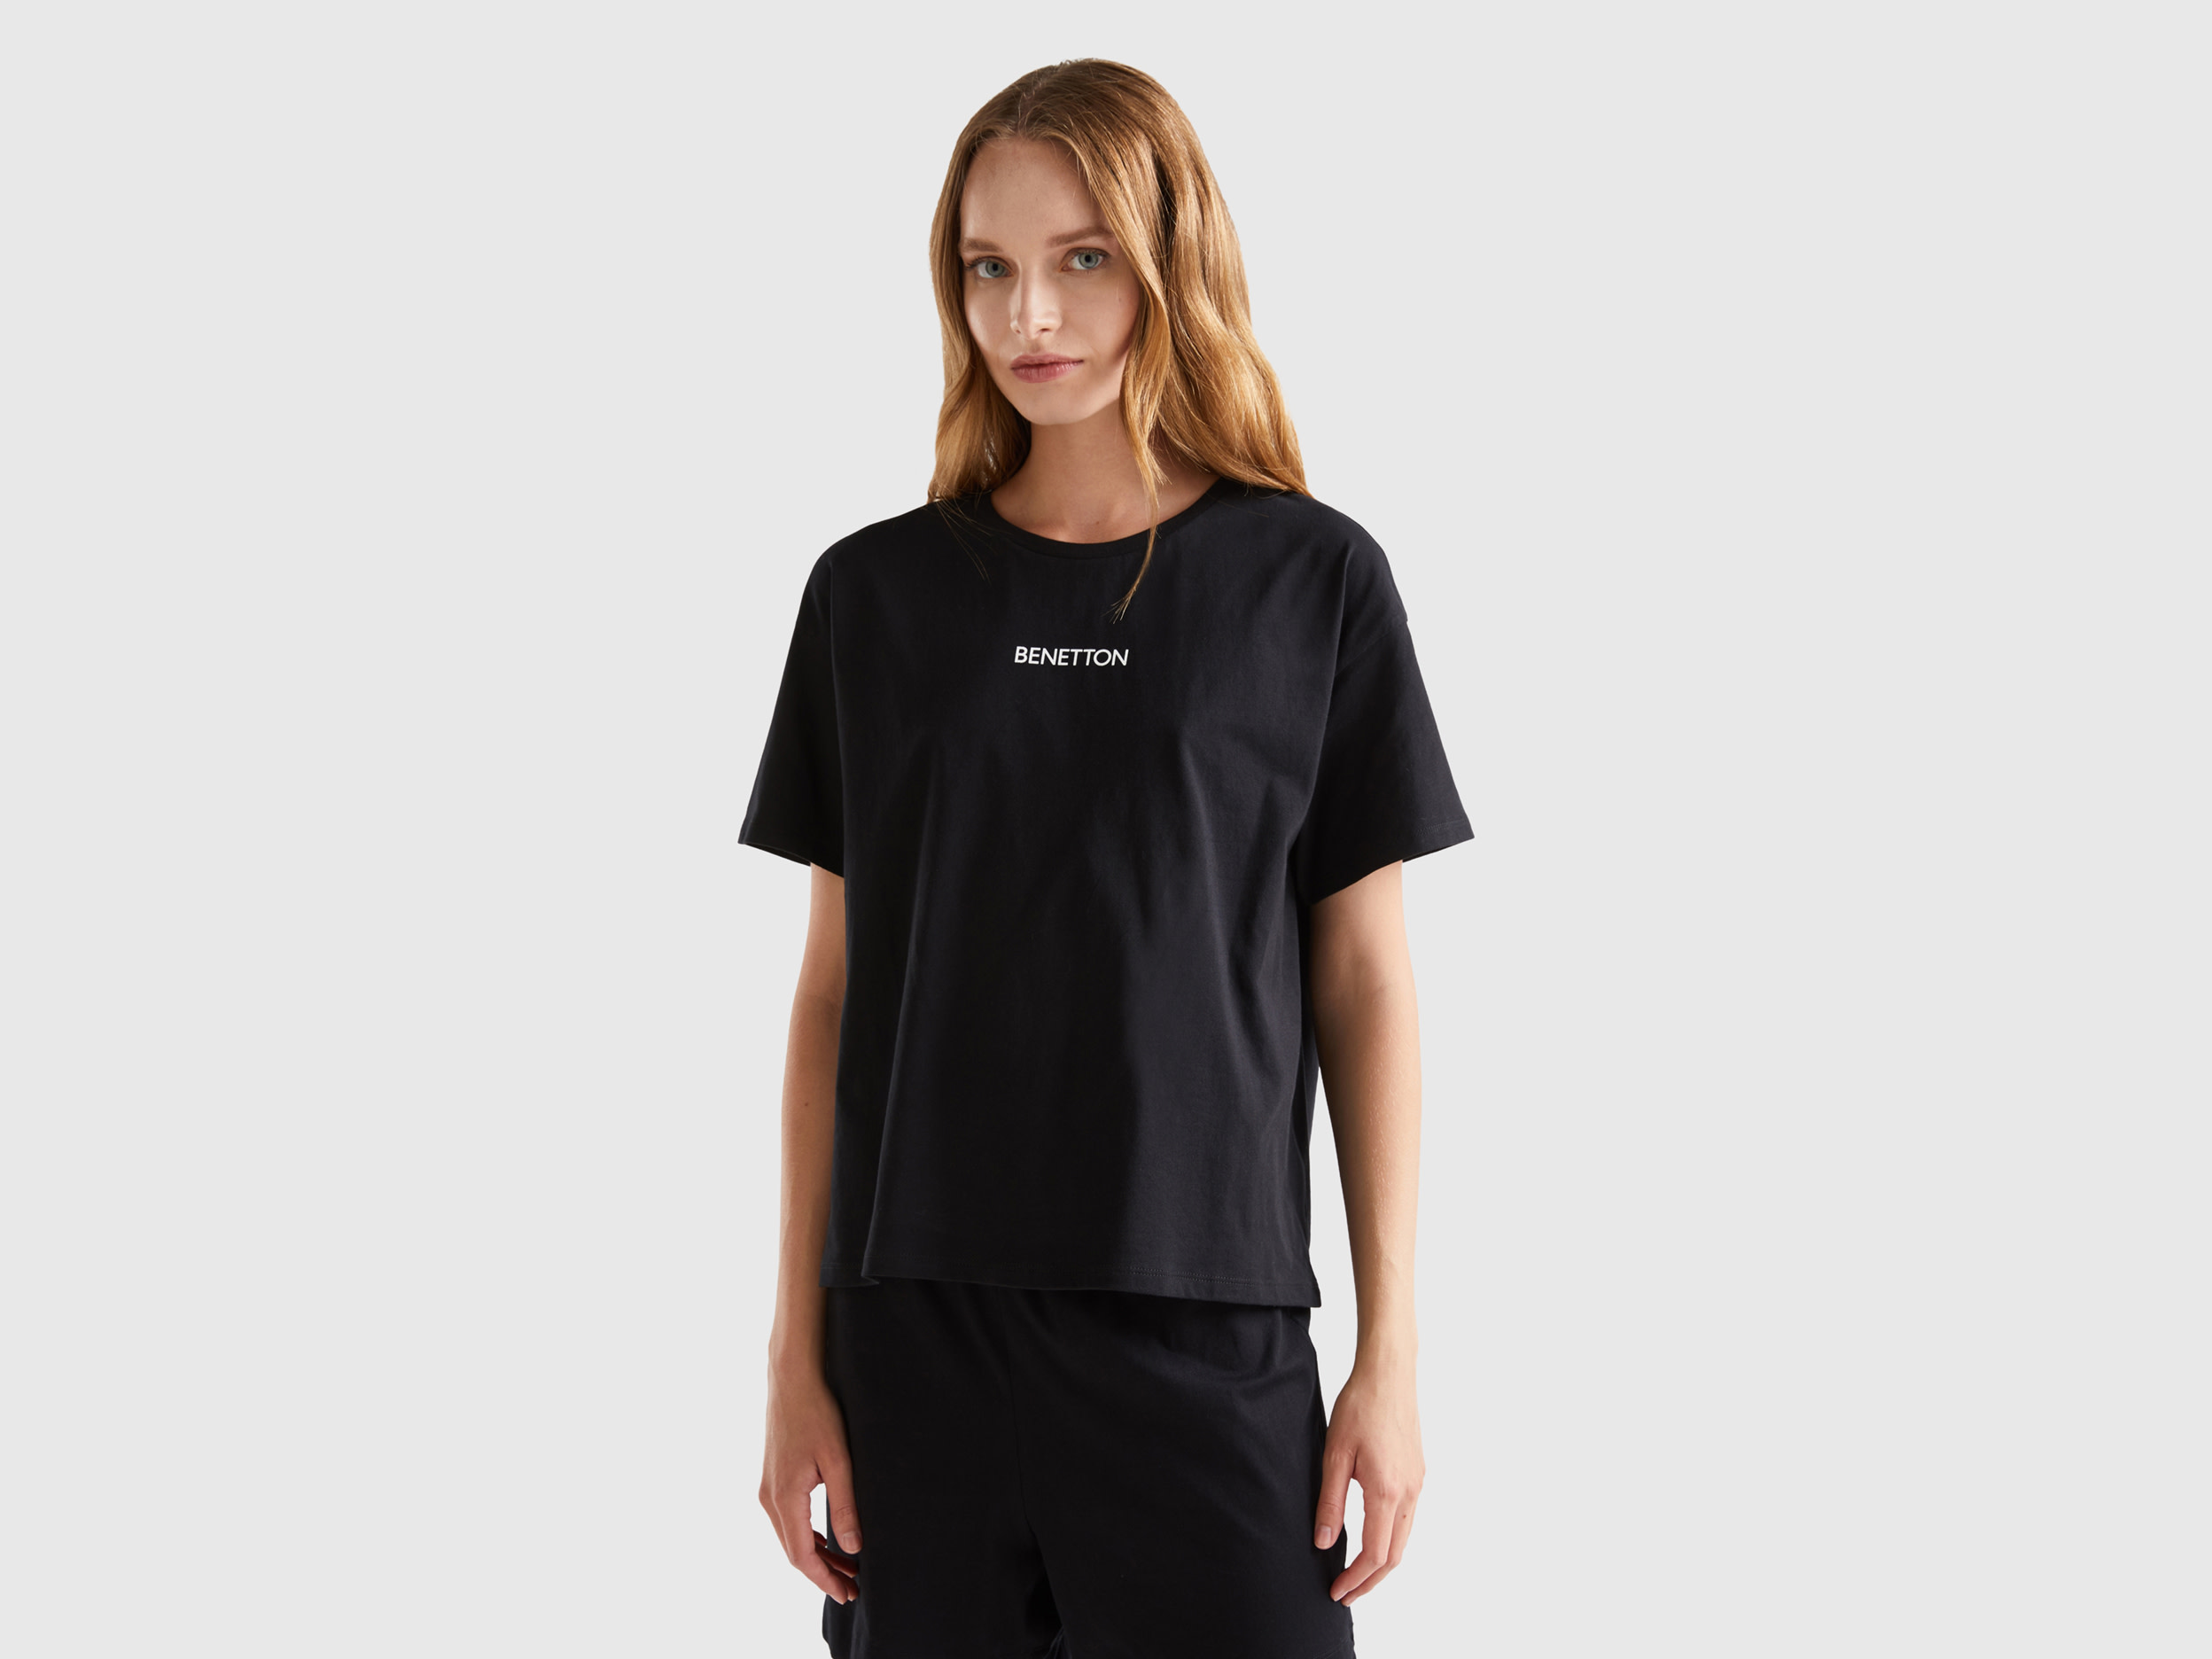 Benetton, 100% Cotton T-shirt, size M, Black, Women